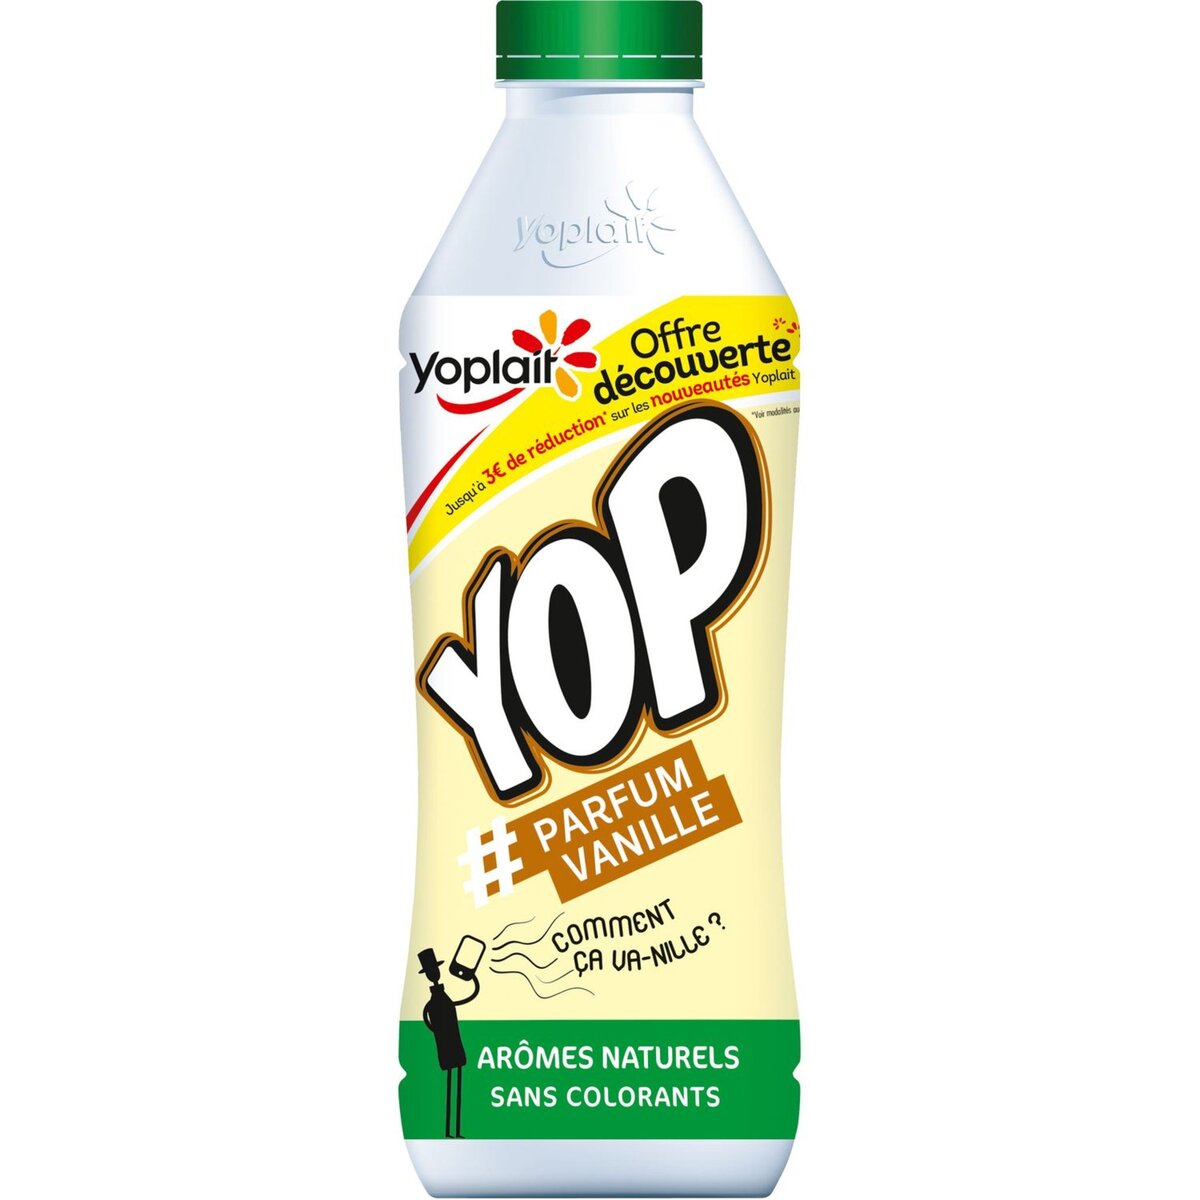 YOP Yop vanille 850g offre découverte